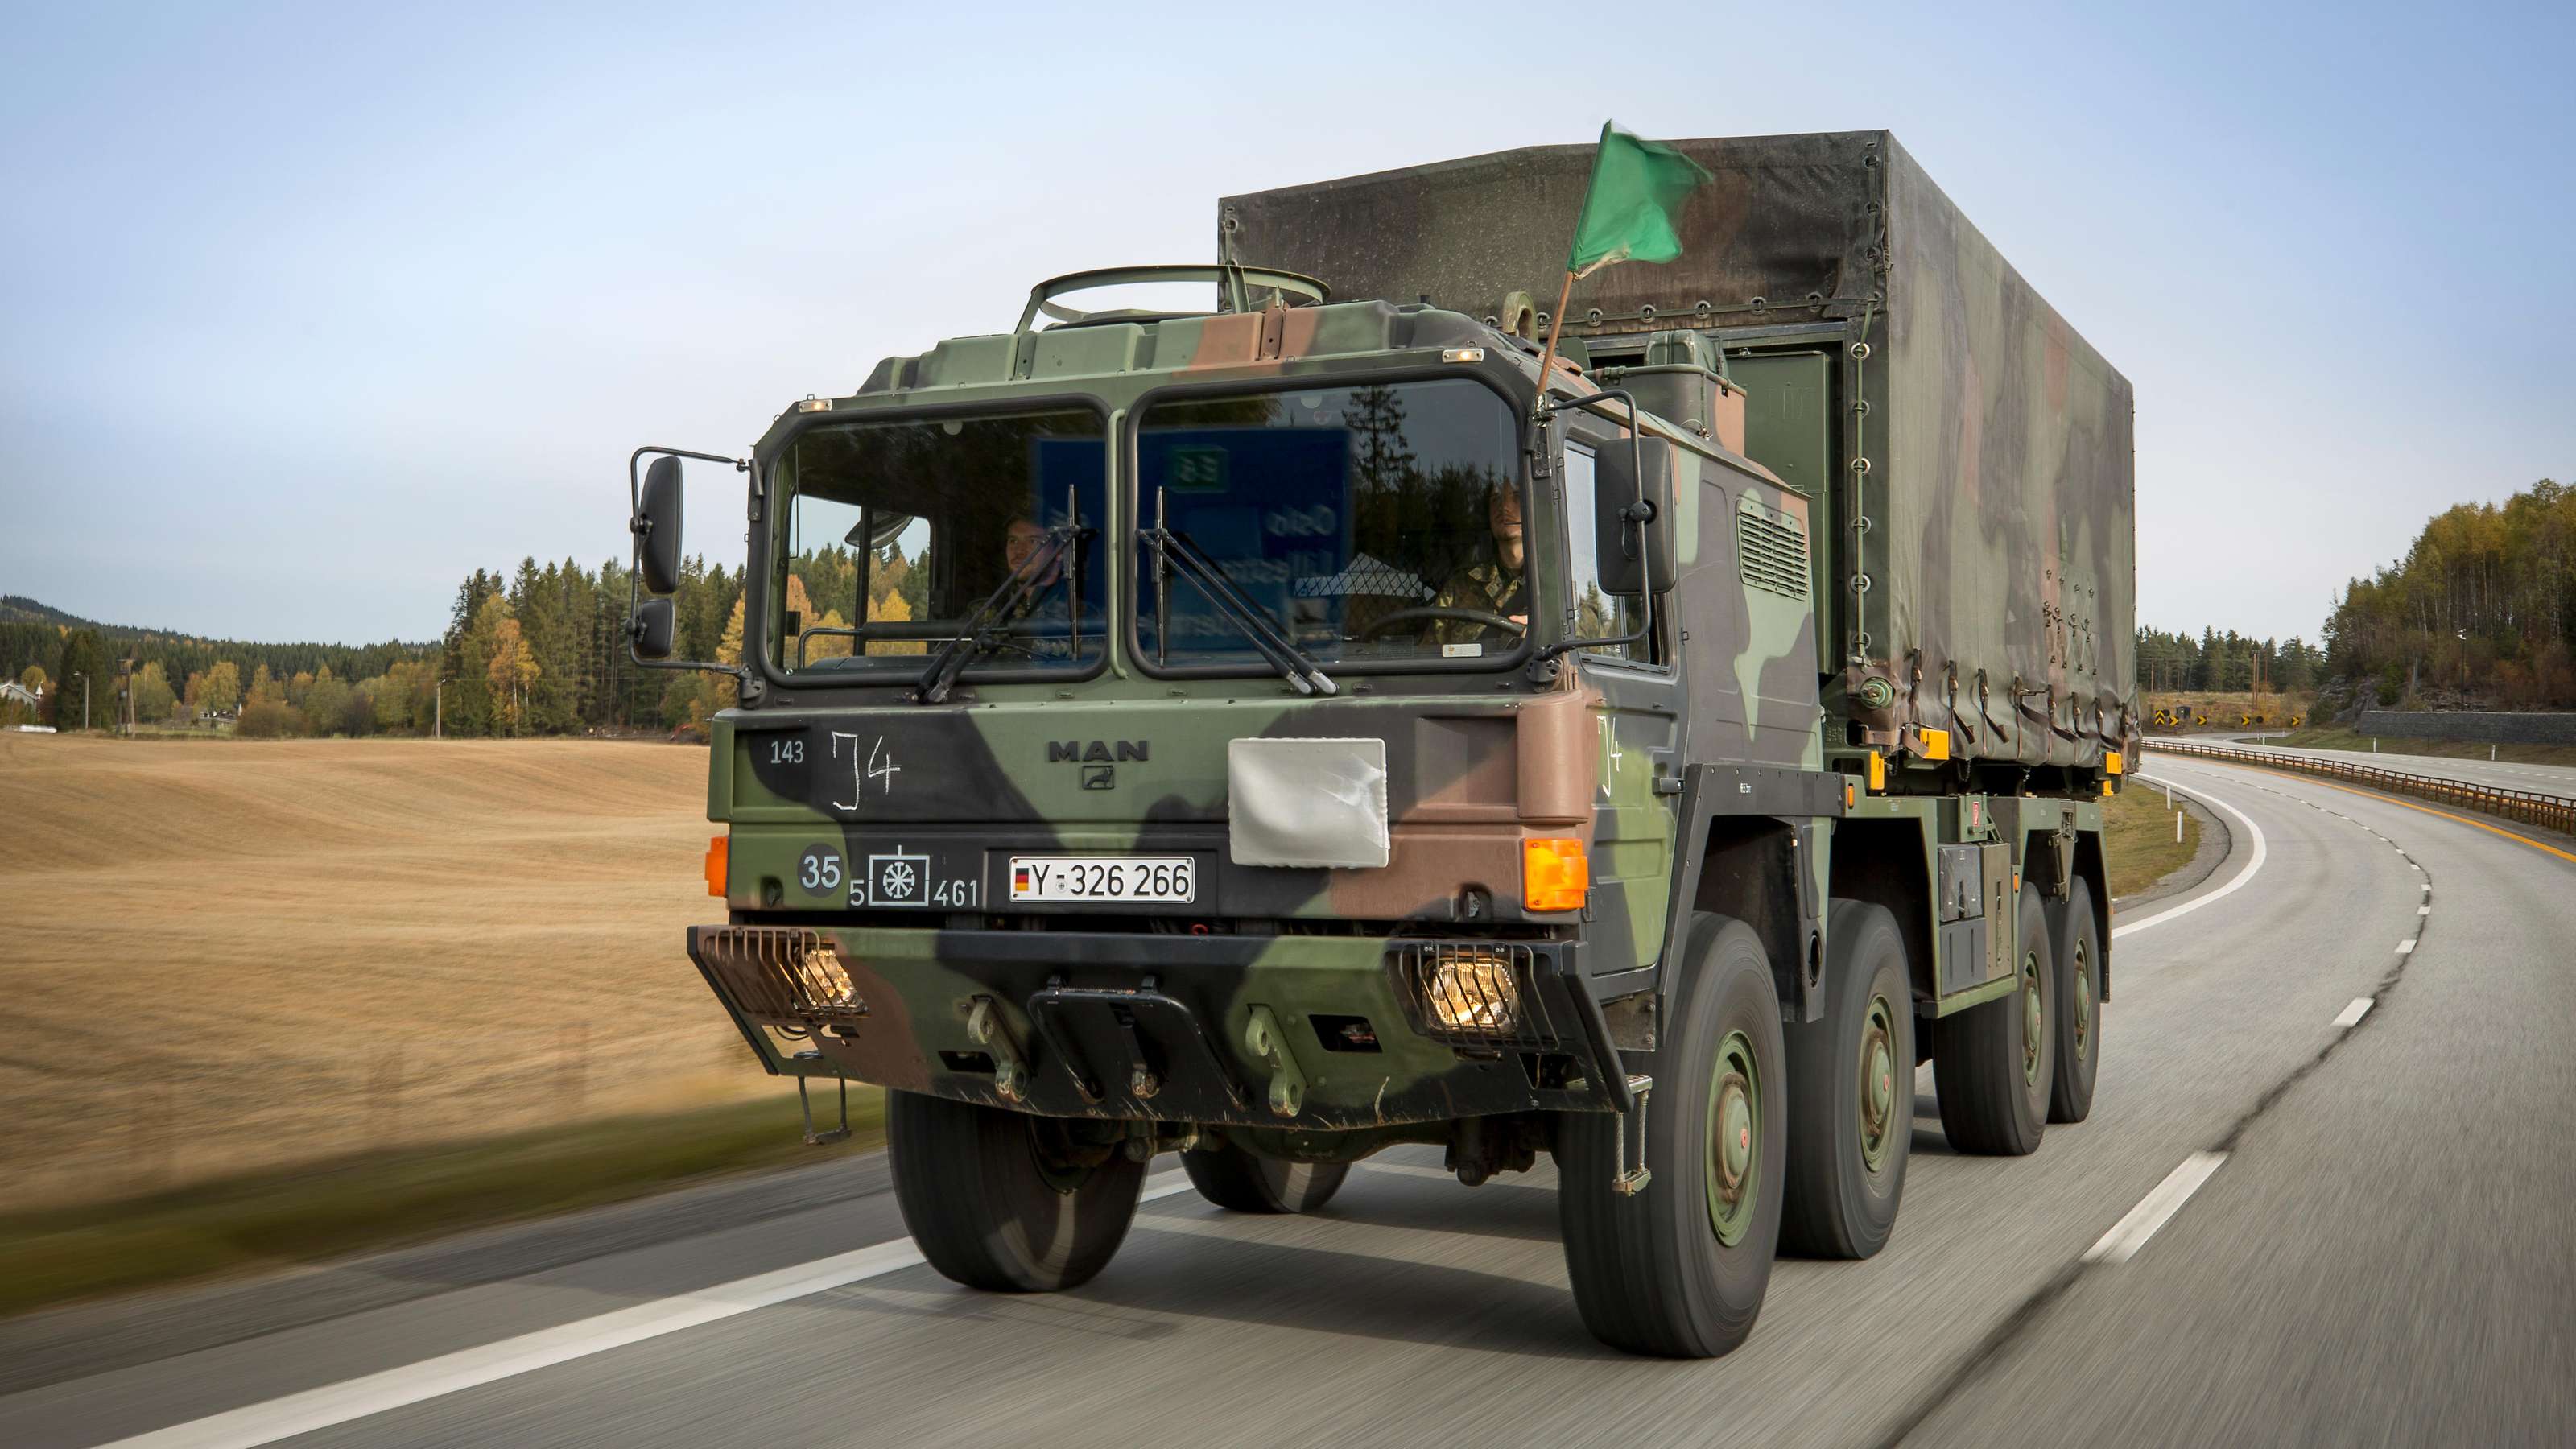 MAN LKW 15t MULTI - Bundeswehr, German Army MAN LKW 15t mil…